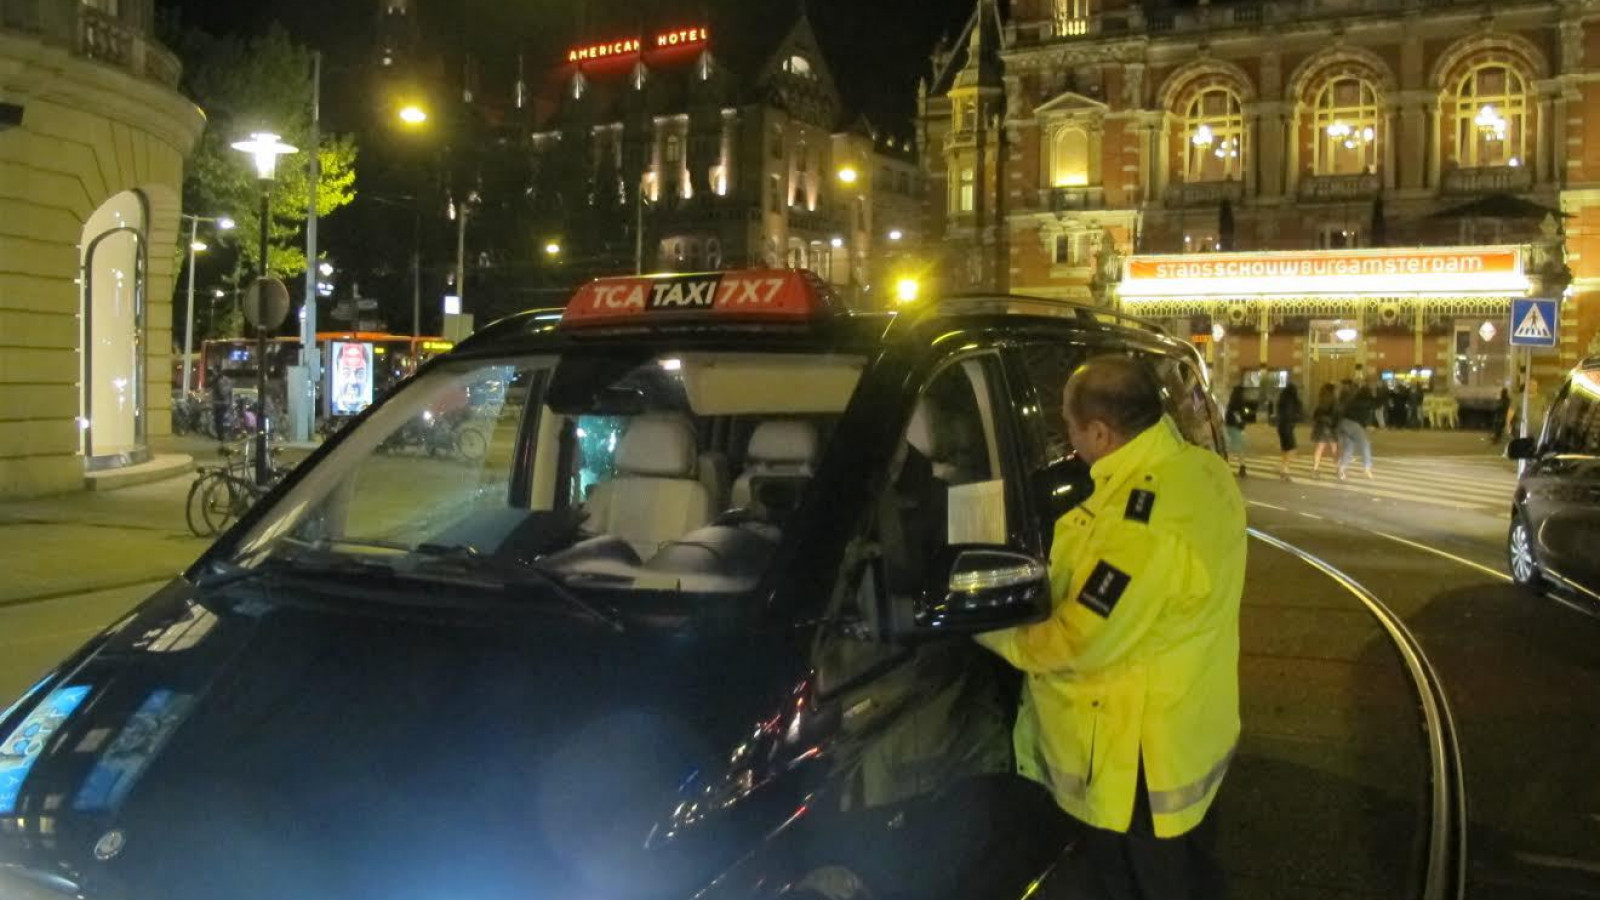 taxi controle taxicontrole handhaving stadstoezicht